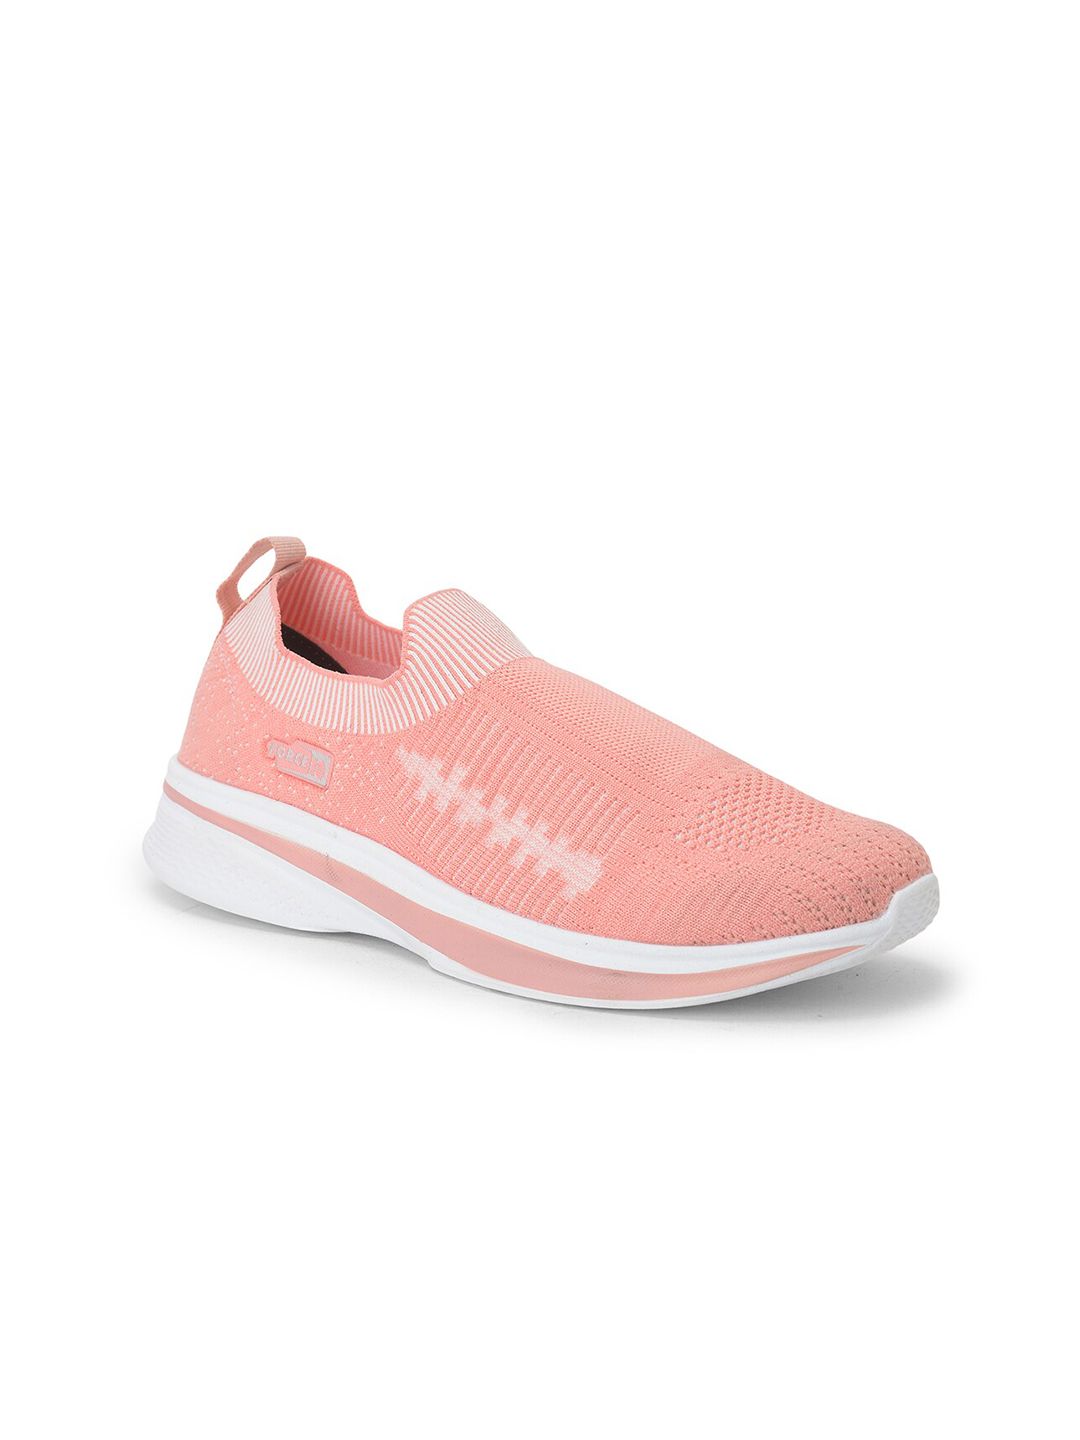 Liberty Women Pink Mesh Walking Non-Marking Shoes Price in India